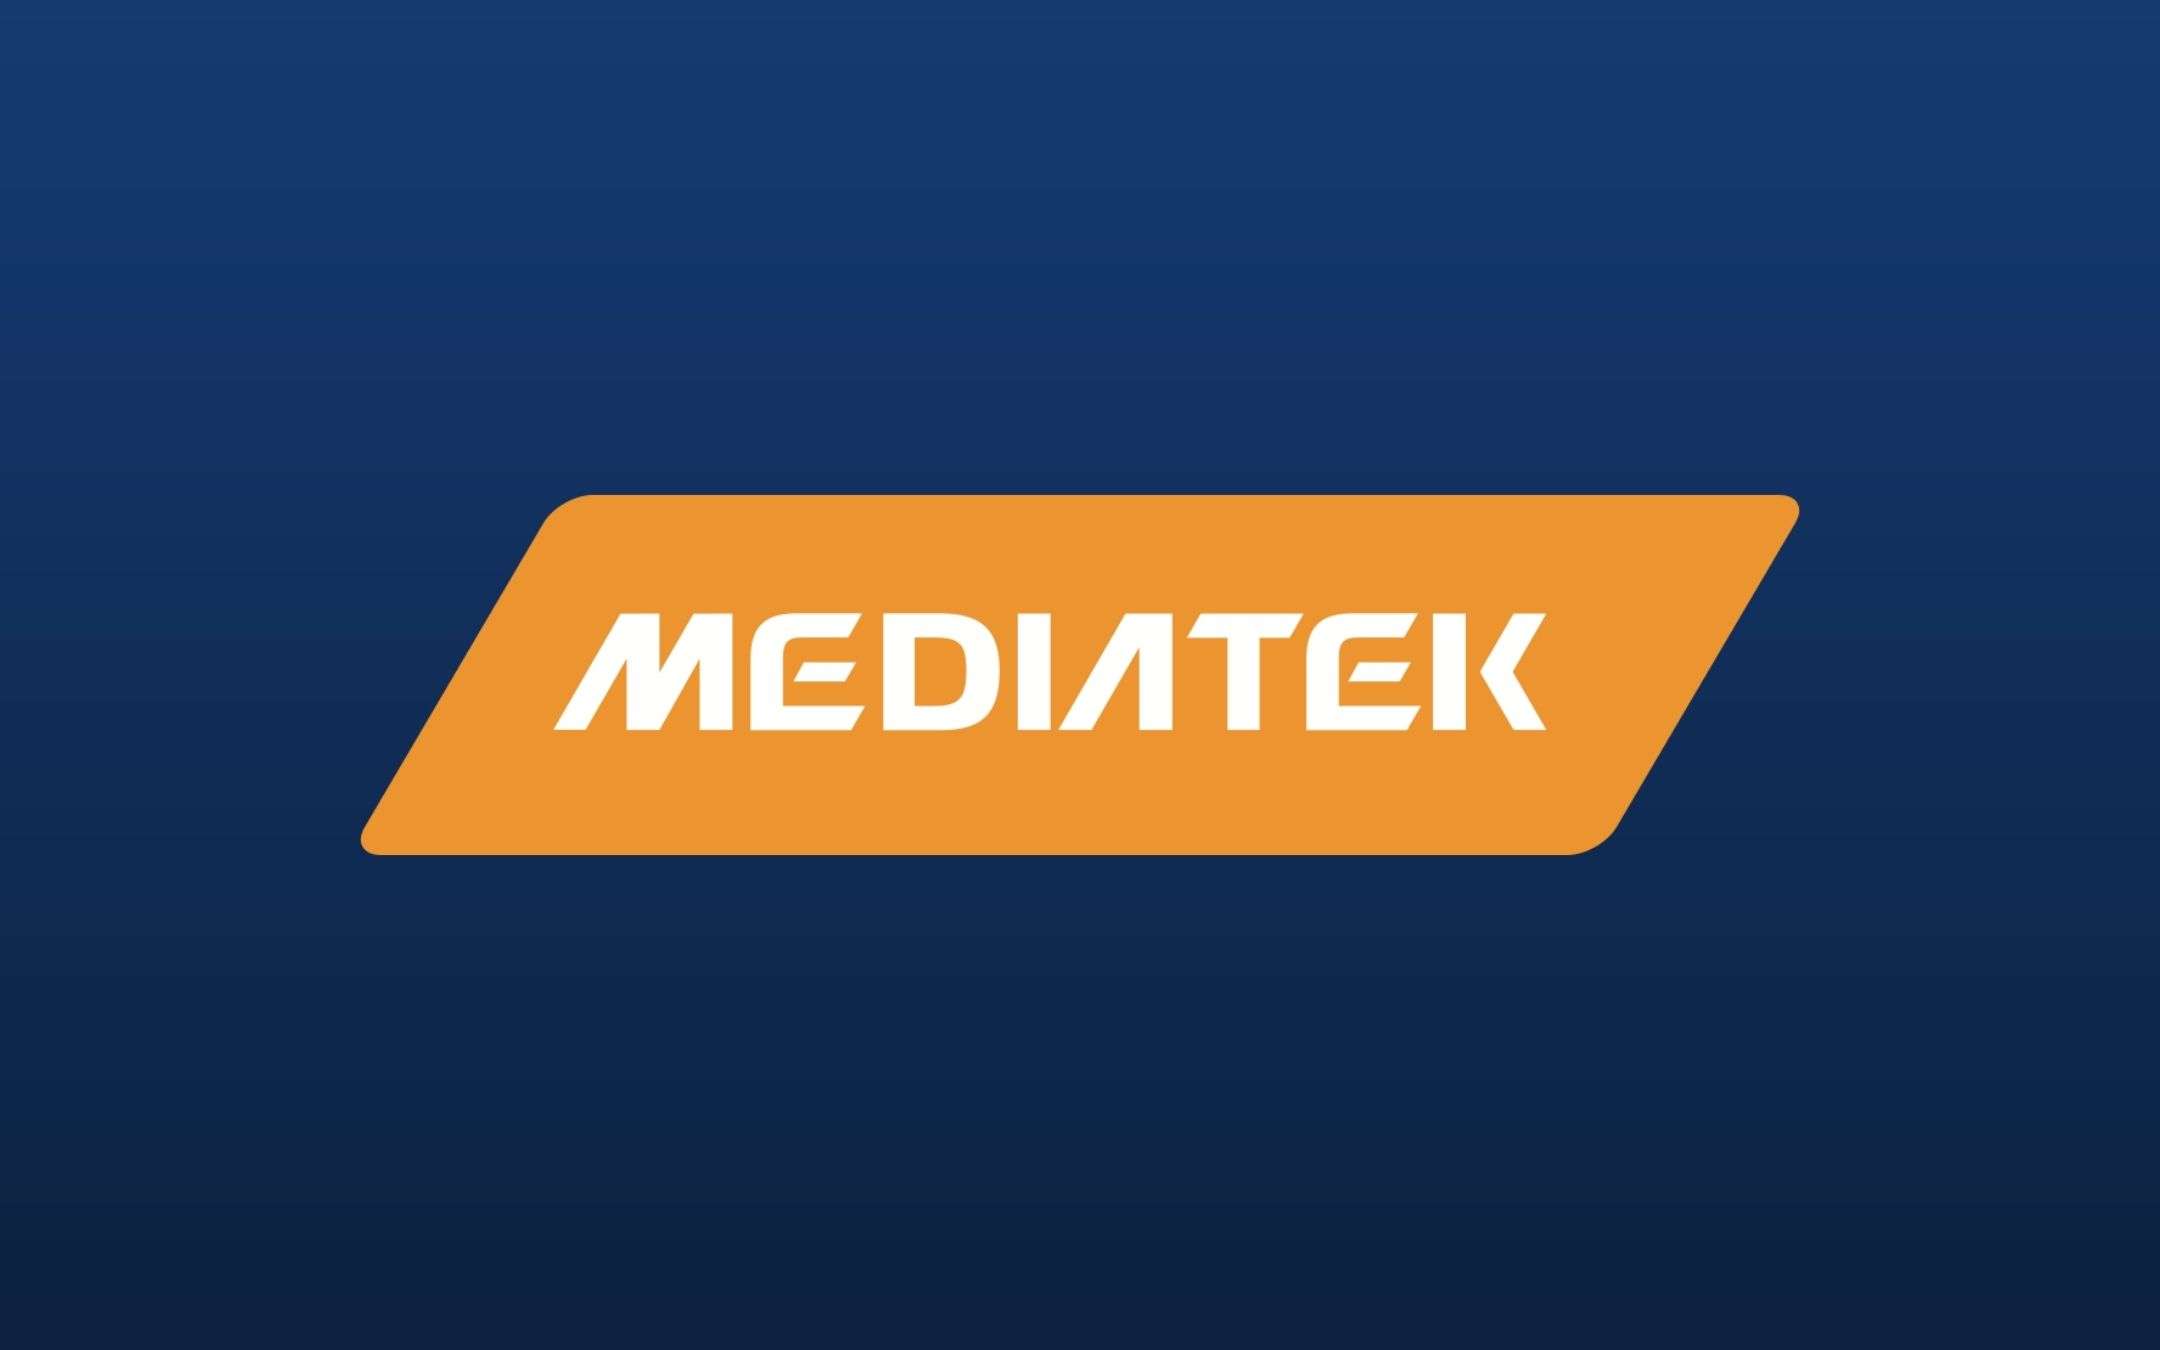 MediaTek continua a crescere senza sosta